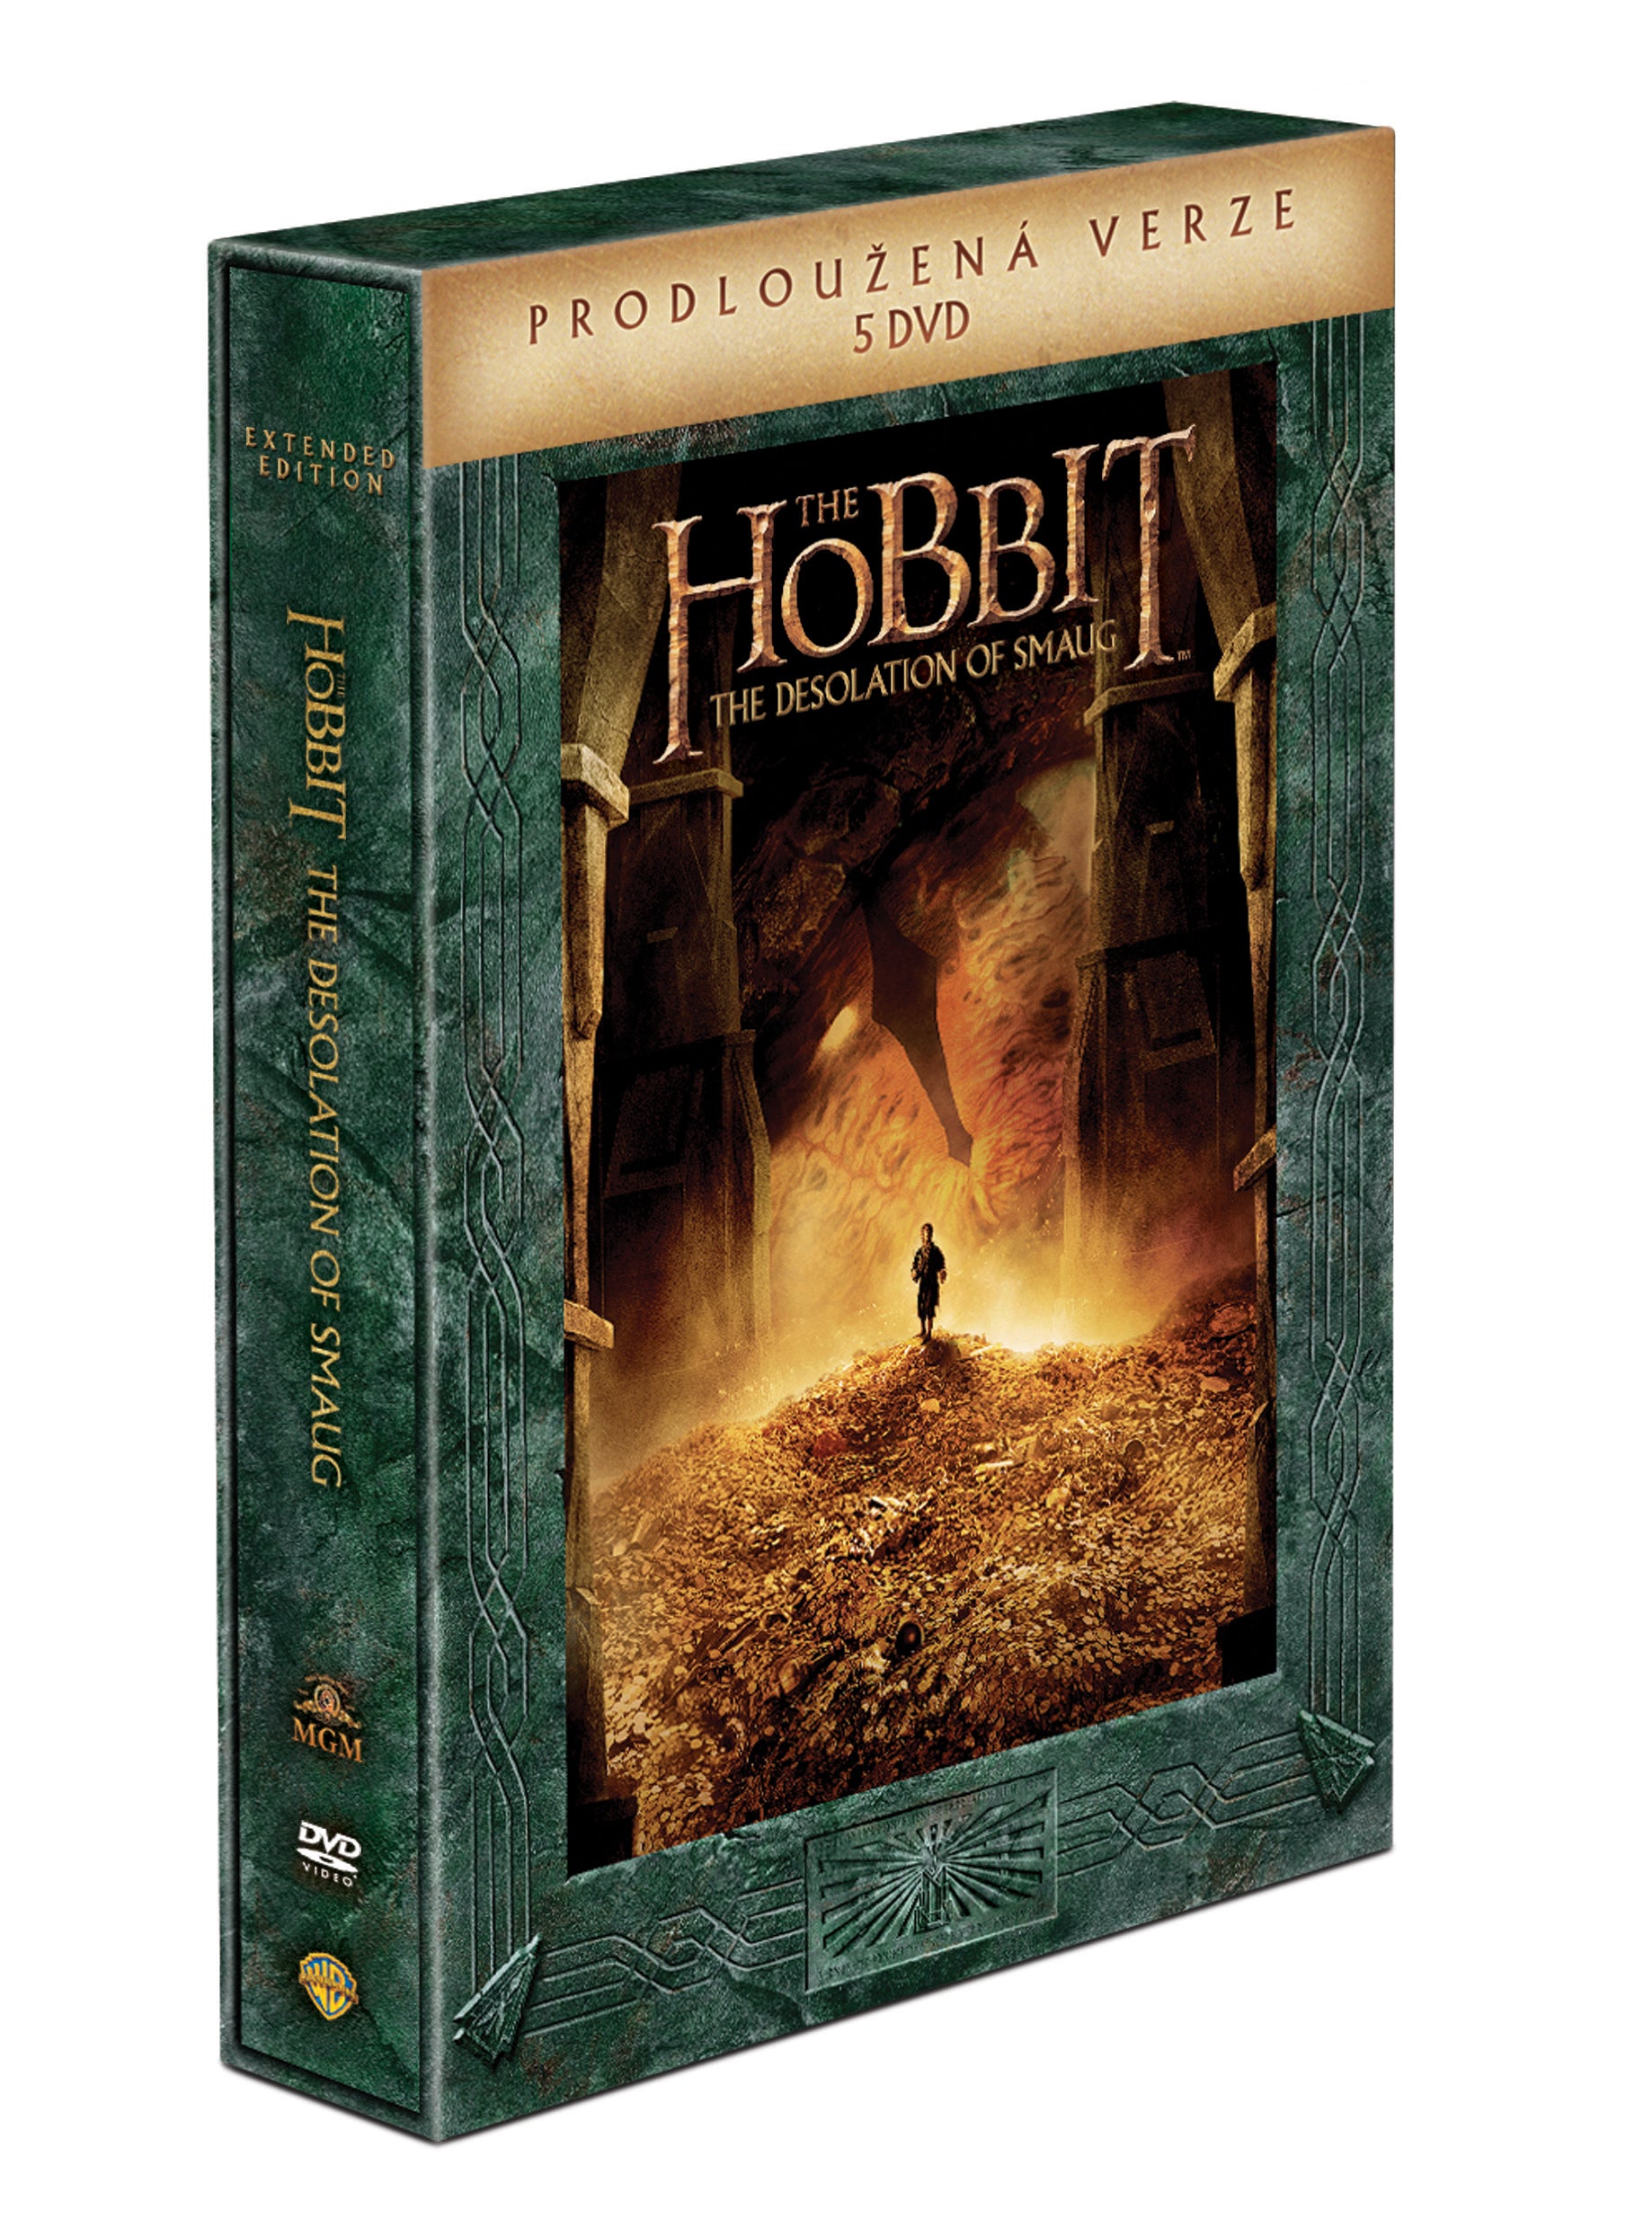 Hobit: Smakova draci poust - veröffentlichte Version 5DVD / Der Hobbit: Smaugs Einöde - Extended Edition